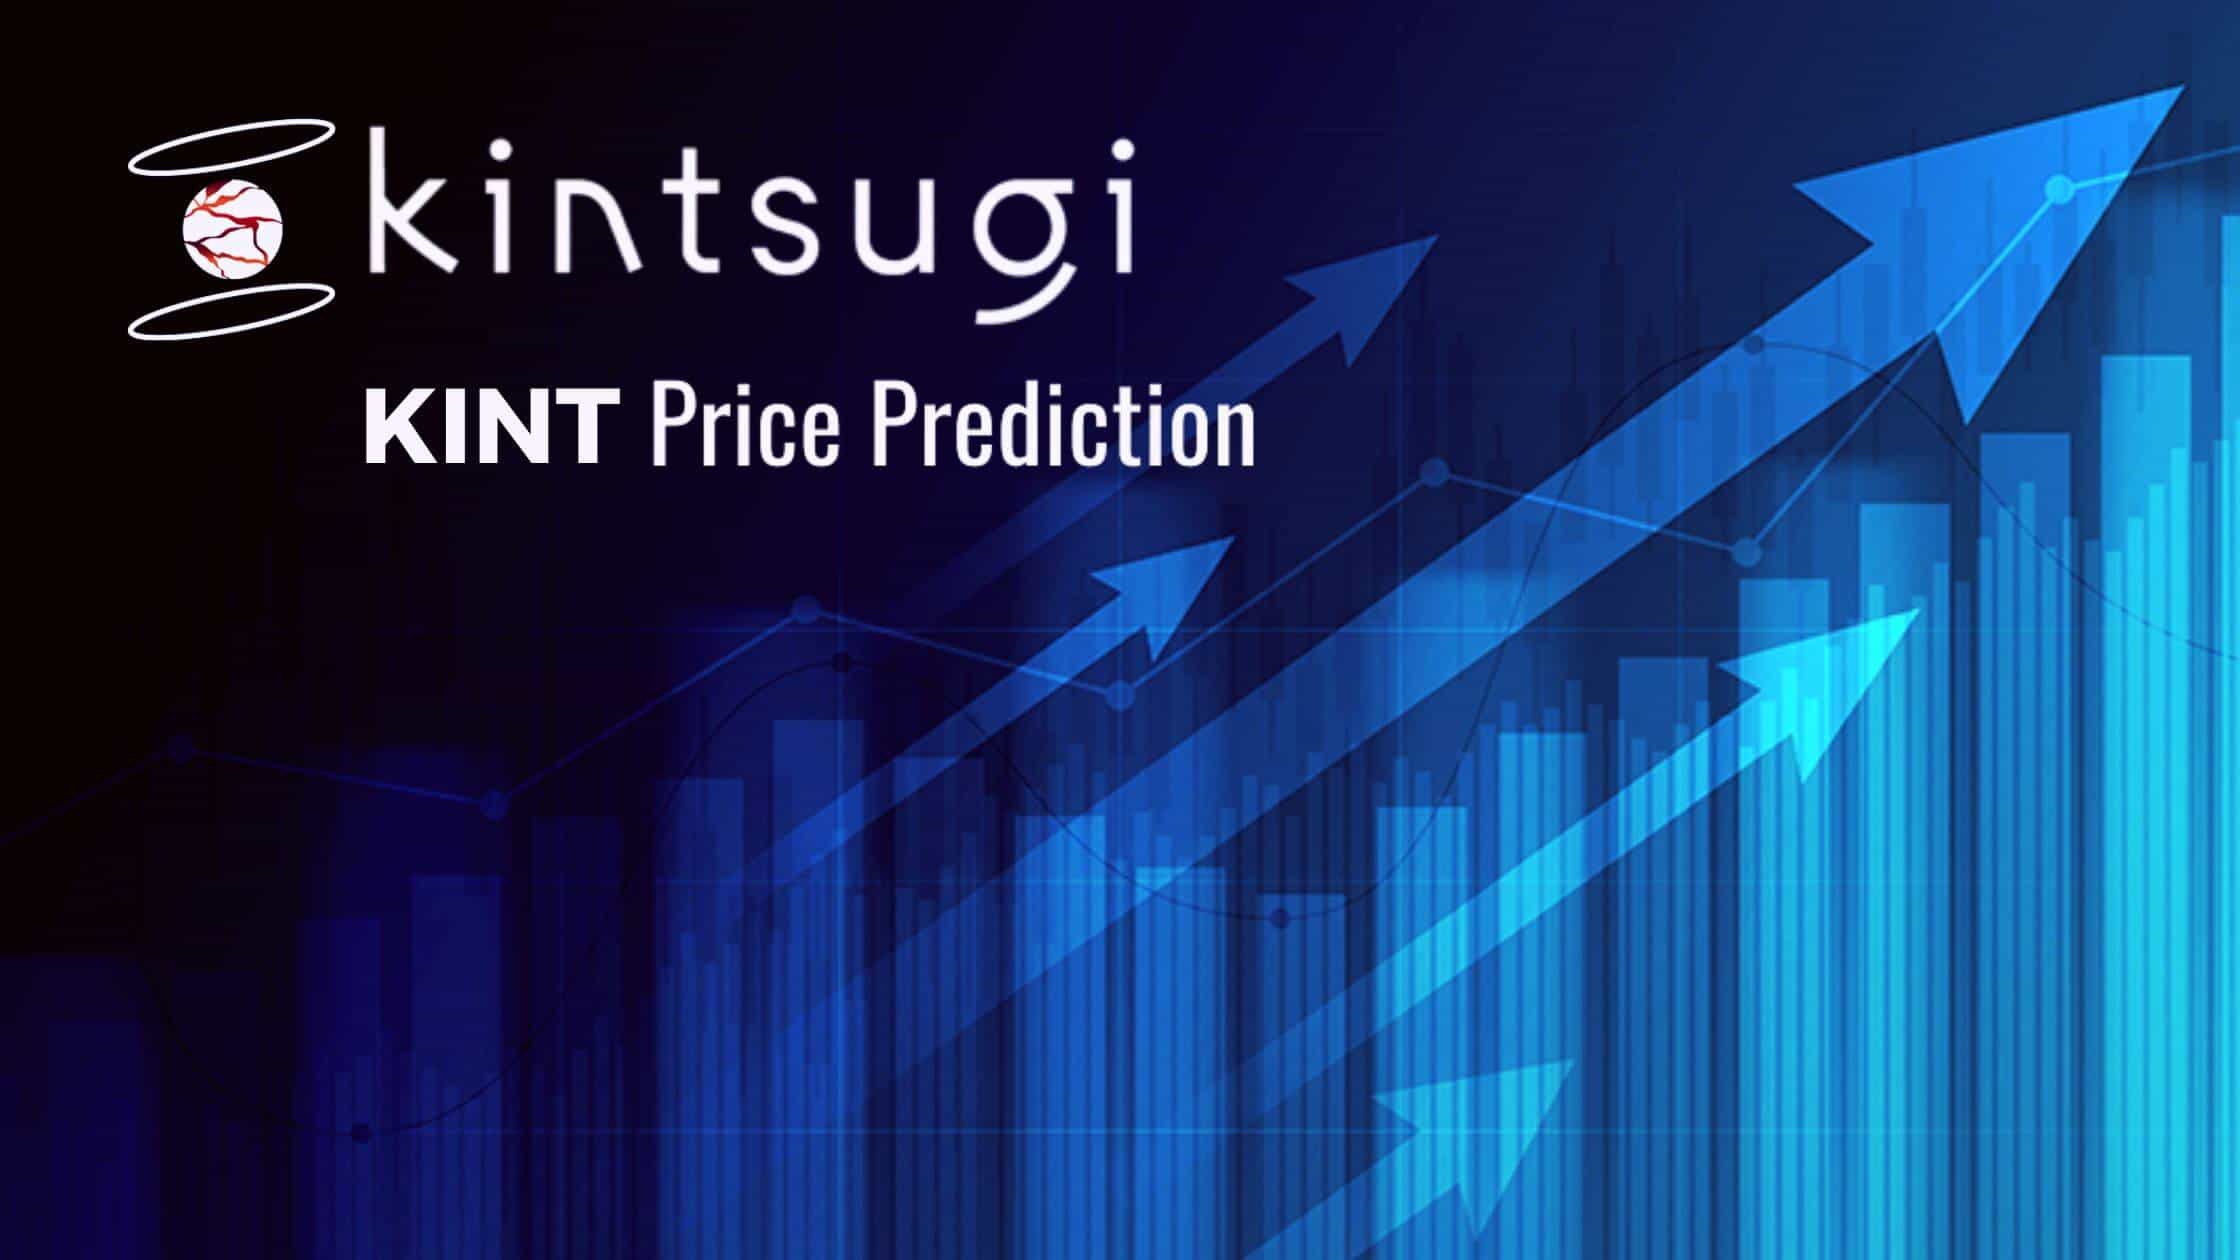 Kintsugi (KINT) Price Prediction For 2023, 2025, And 2030 Let's Check